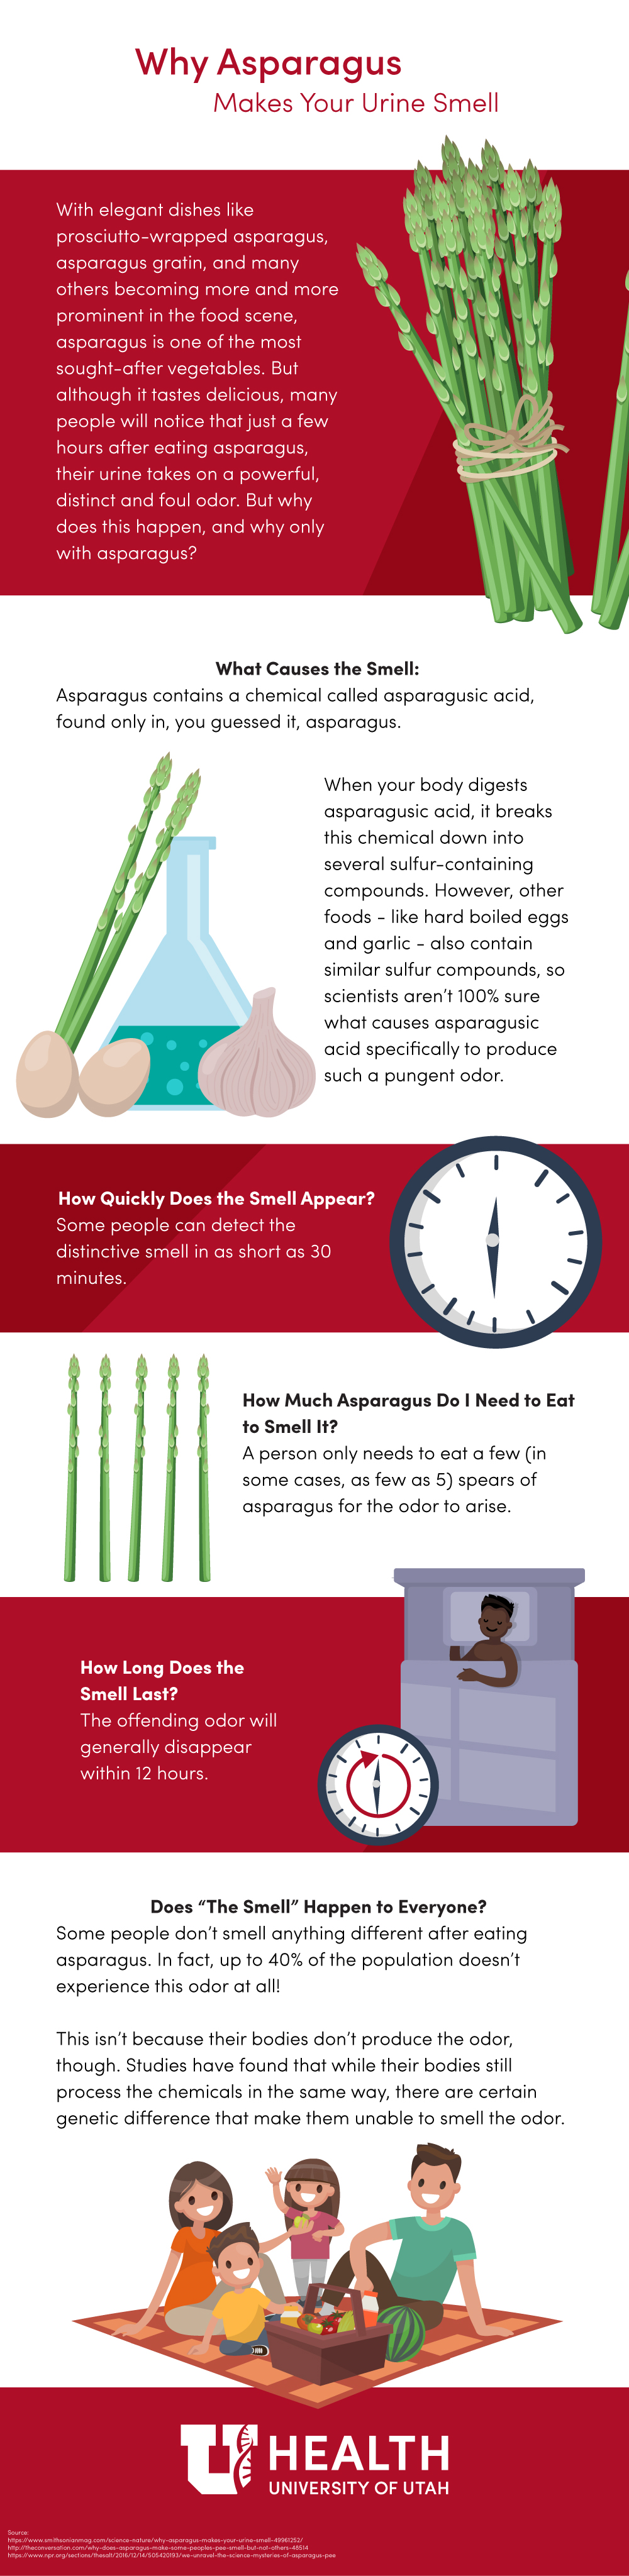 asparagus infographic